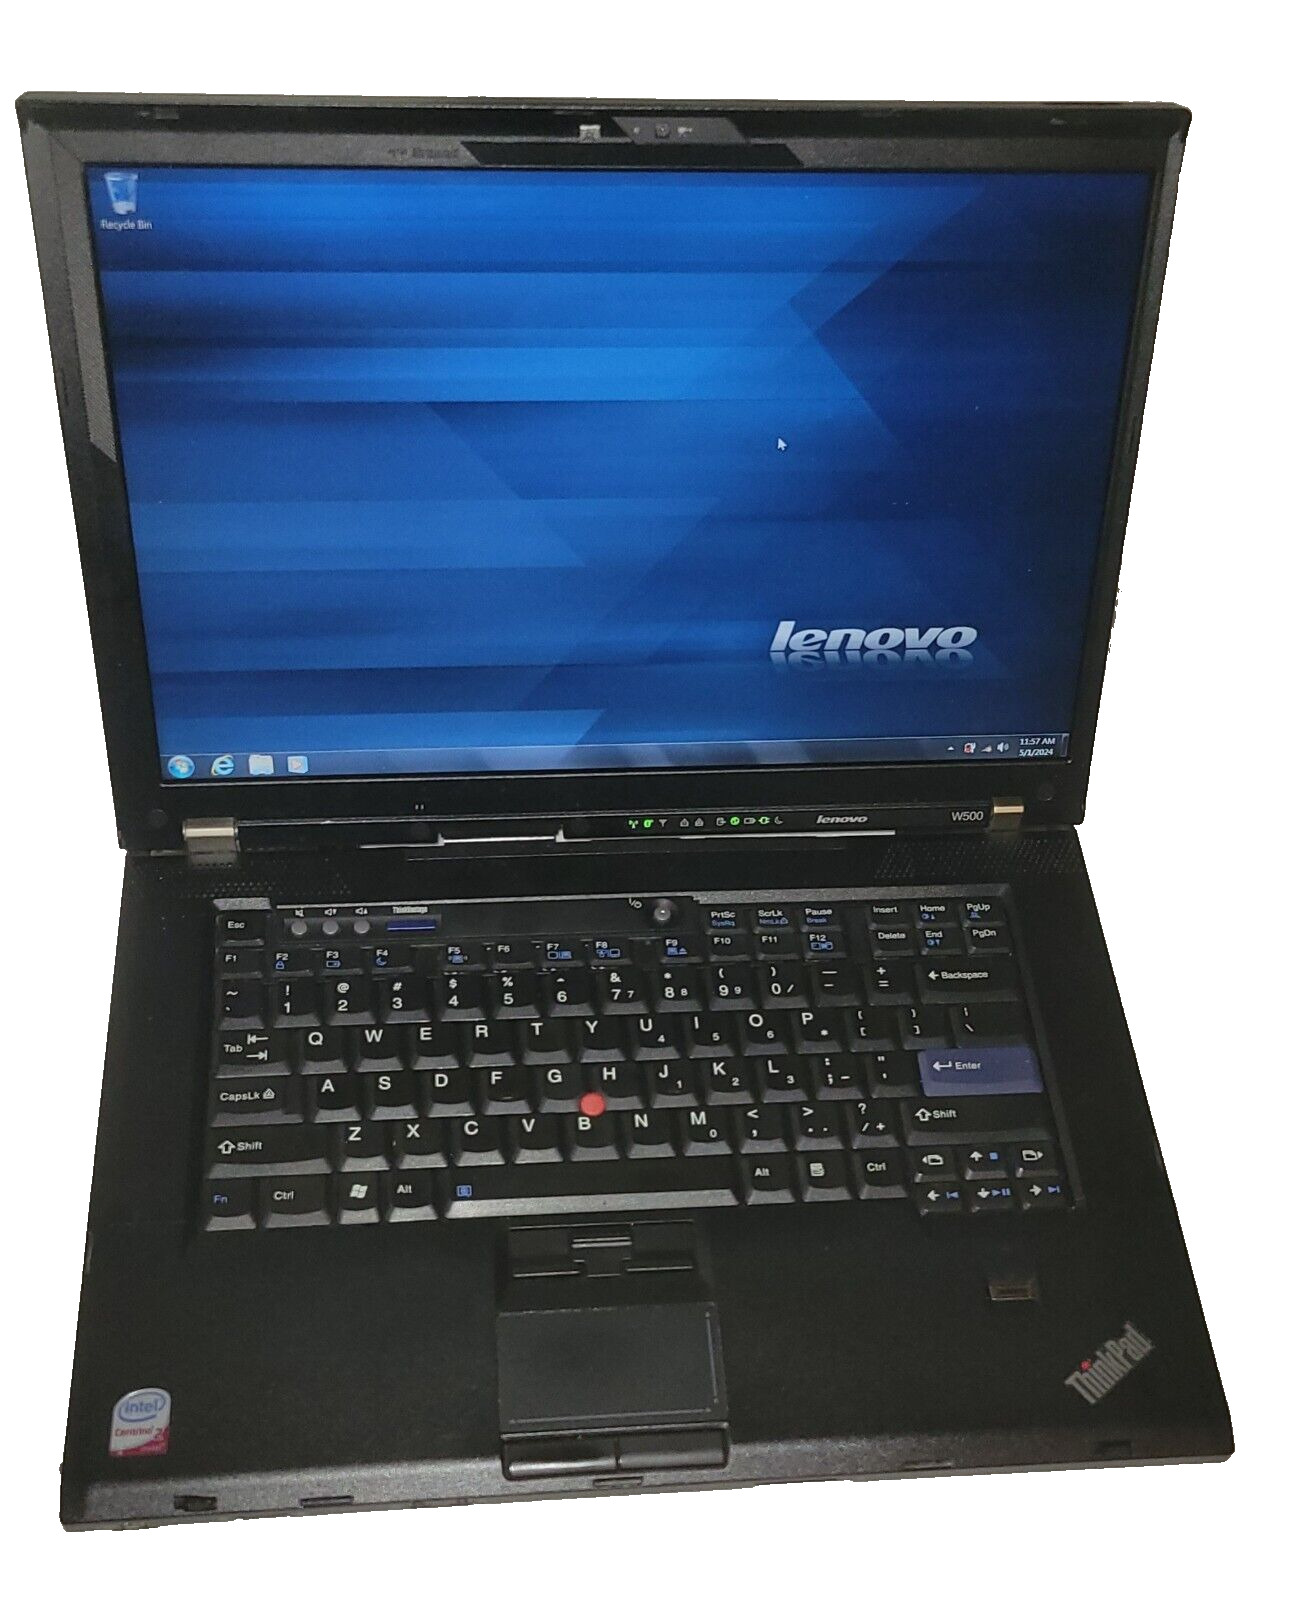 Lenovo ThinkPad W500 Intel Core Duo @ 2.8GHz 2GB RAM 256GB SSD WIN 7 + Ac Adaptr